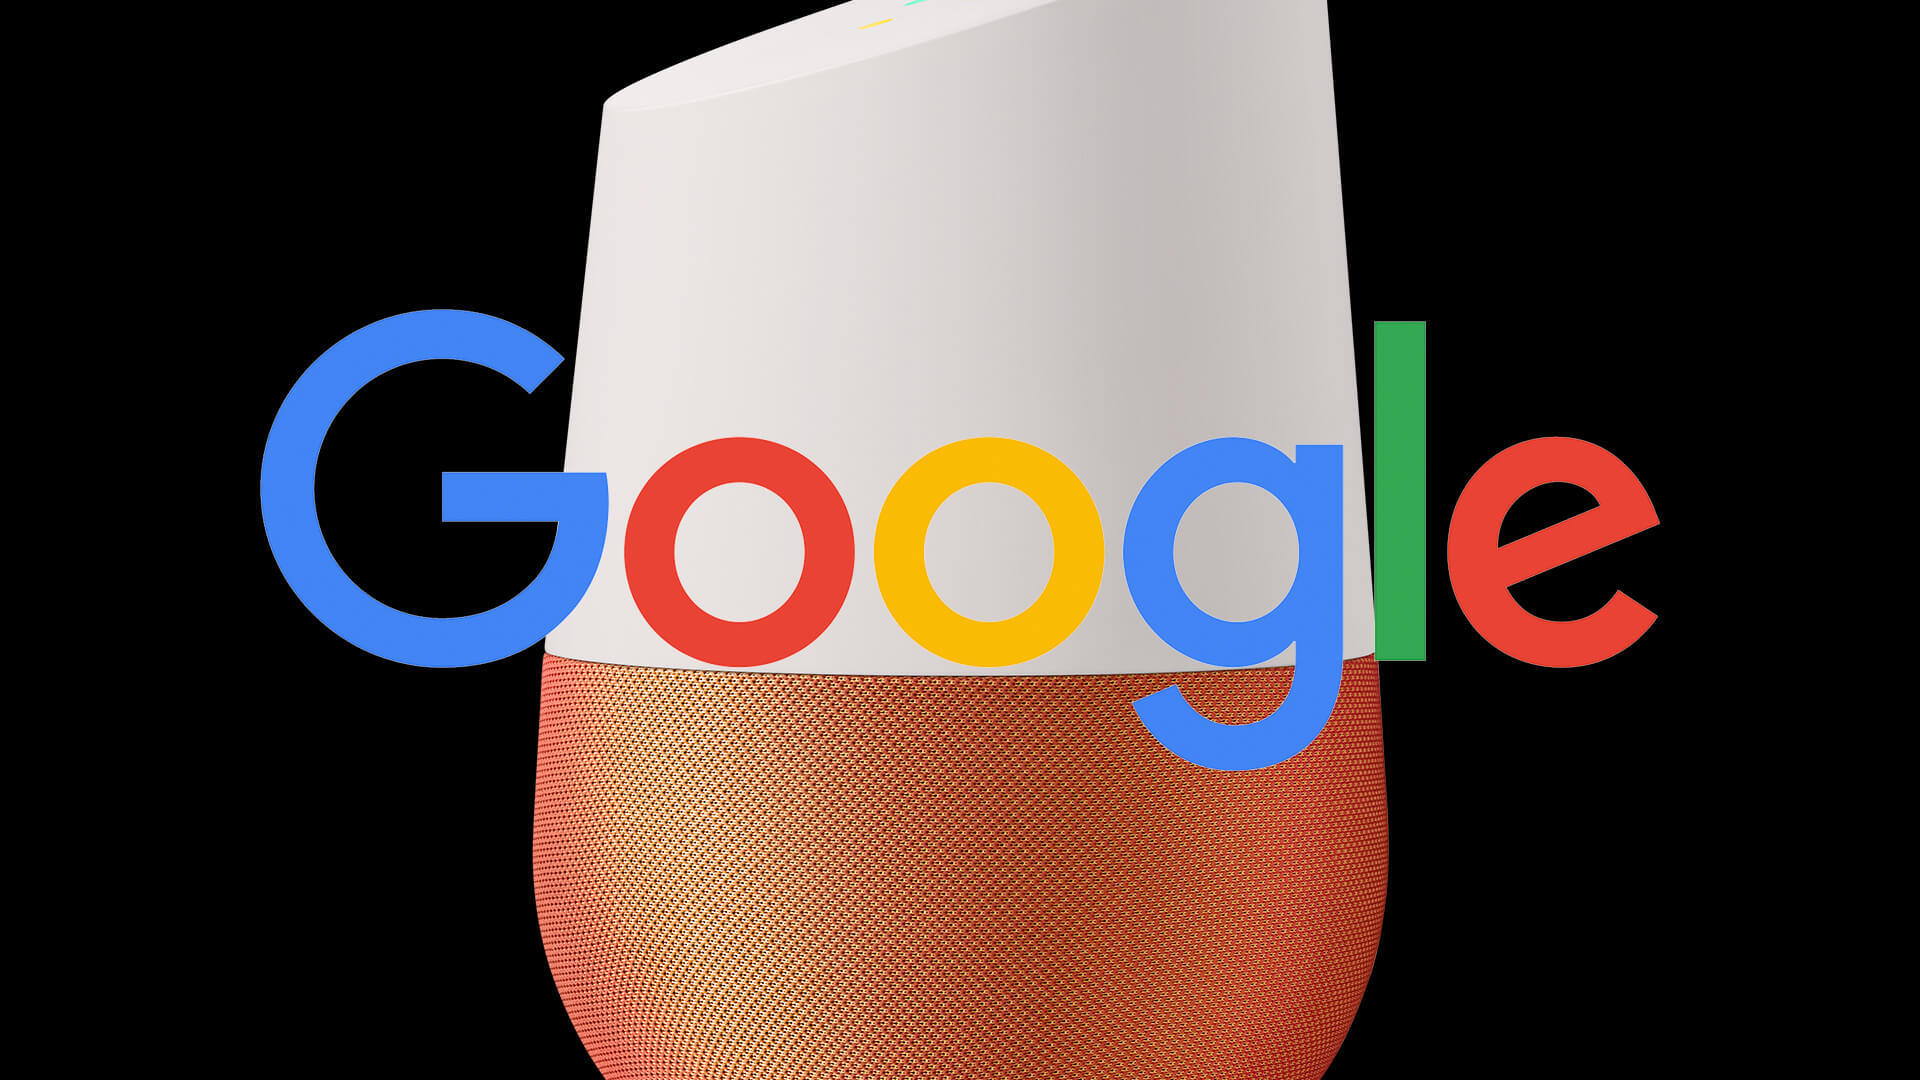 A Google Home with an orange base